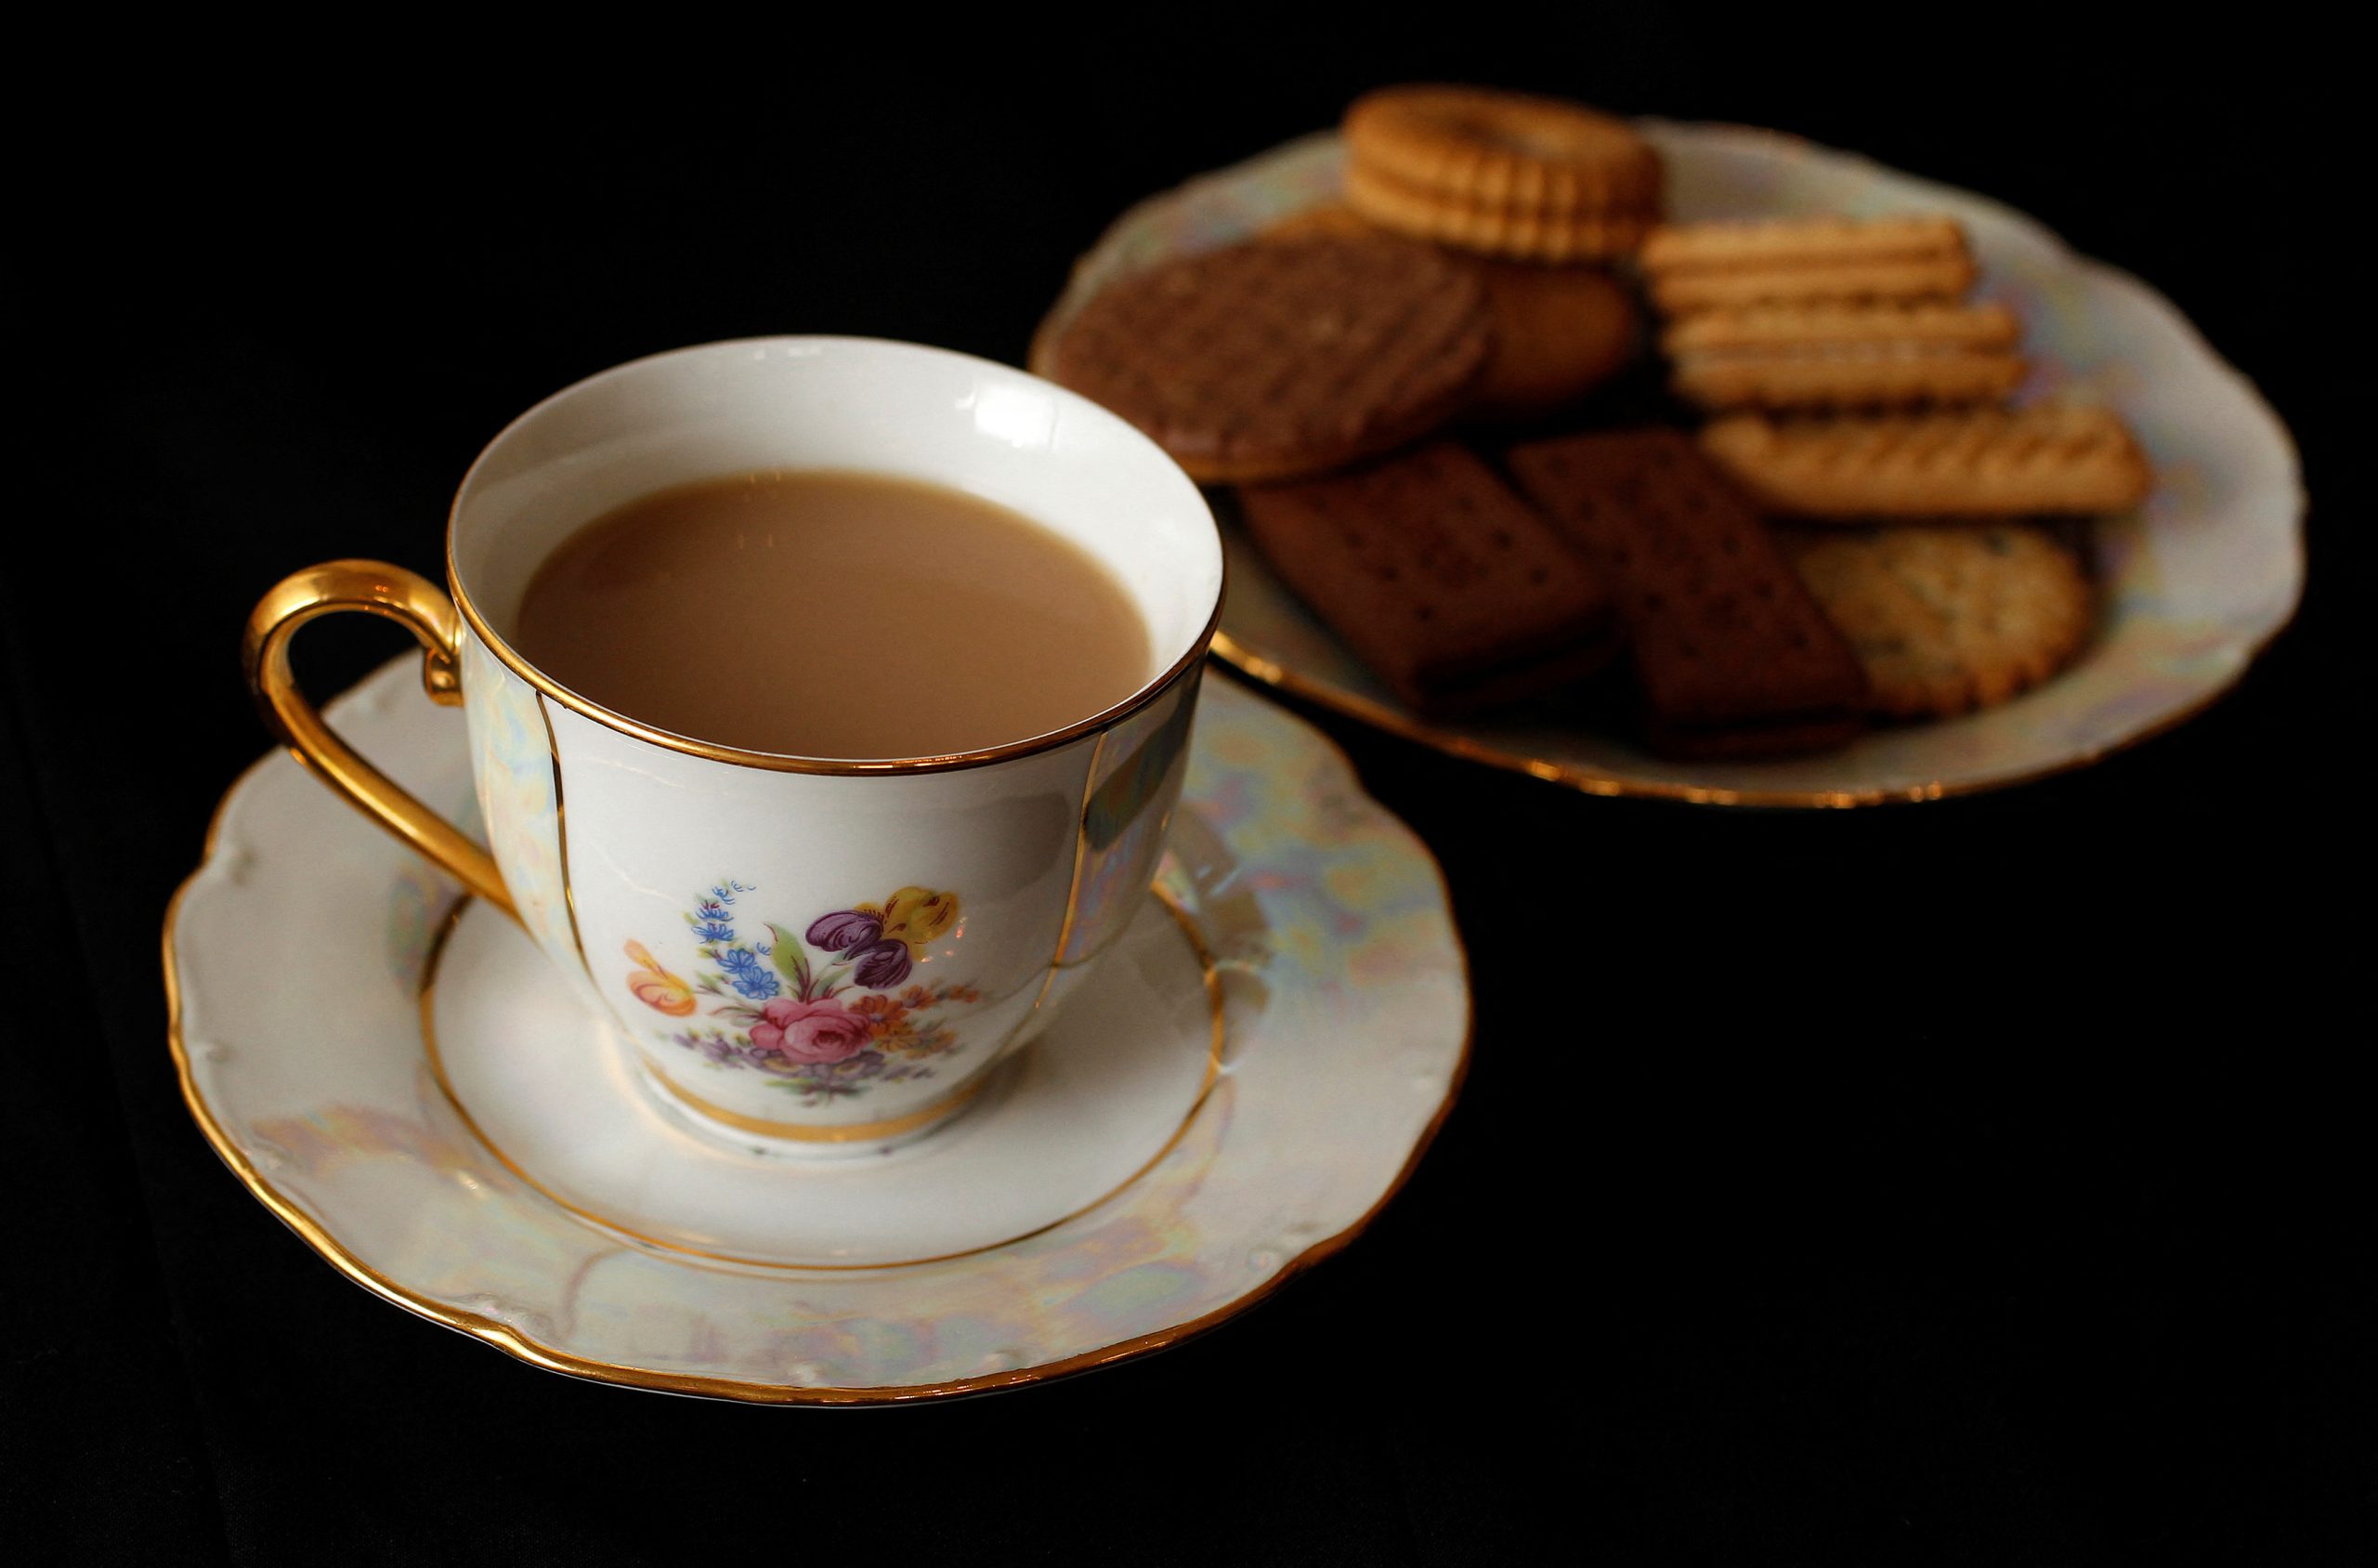 British Retail Consortium Warns of Impending Tea Crisis in UK